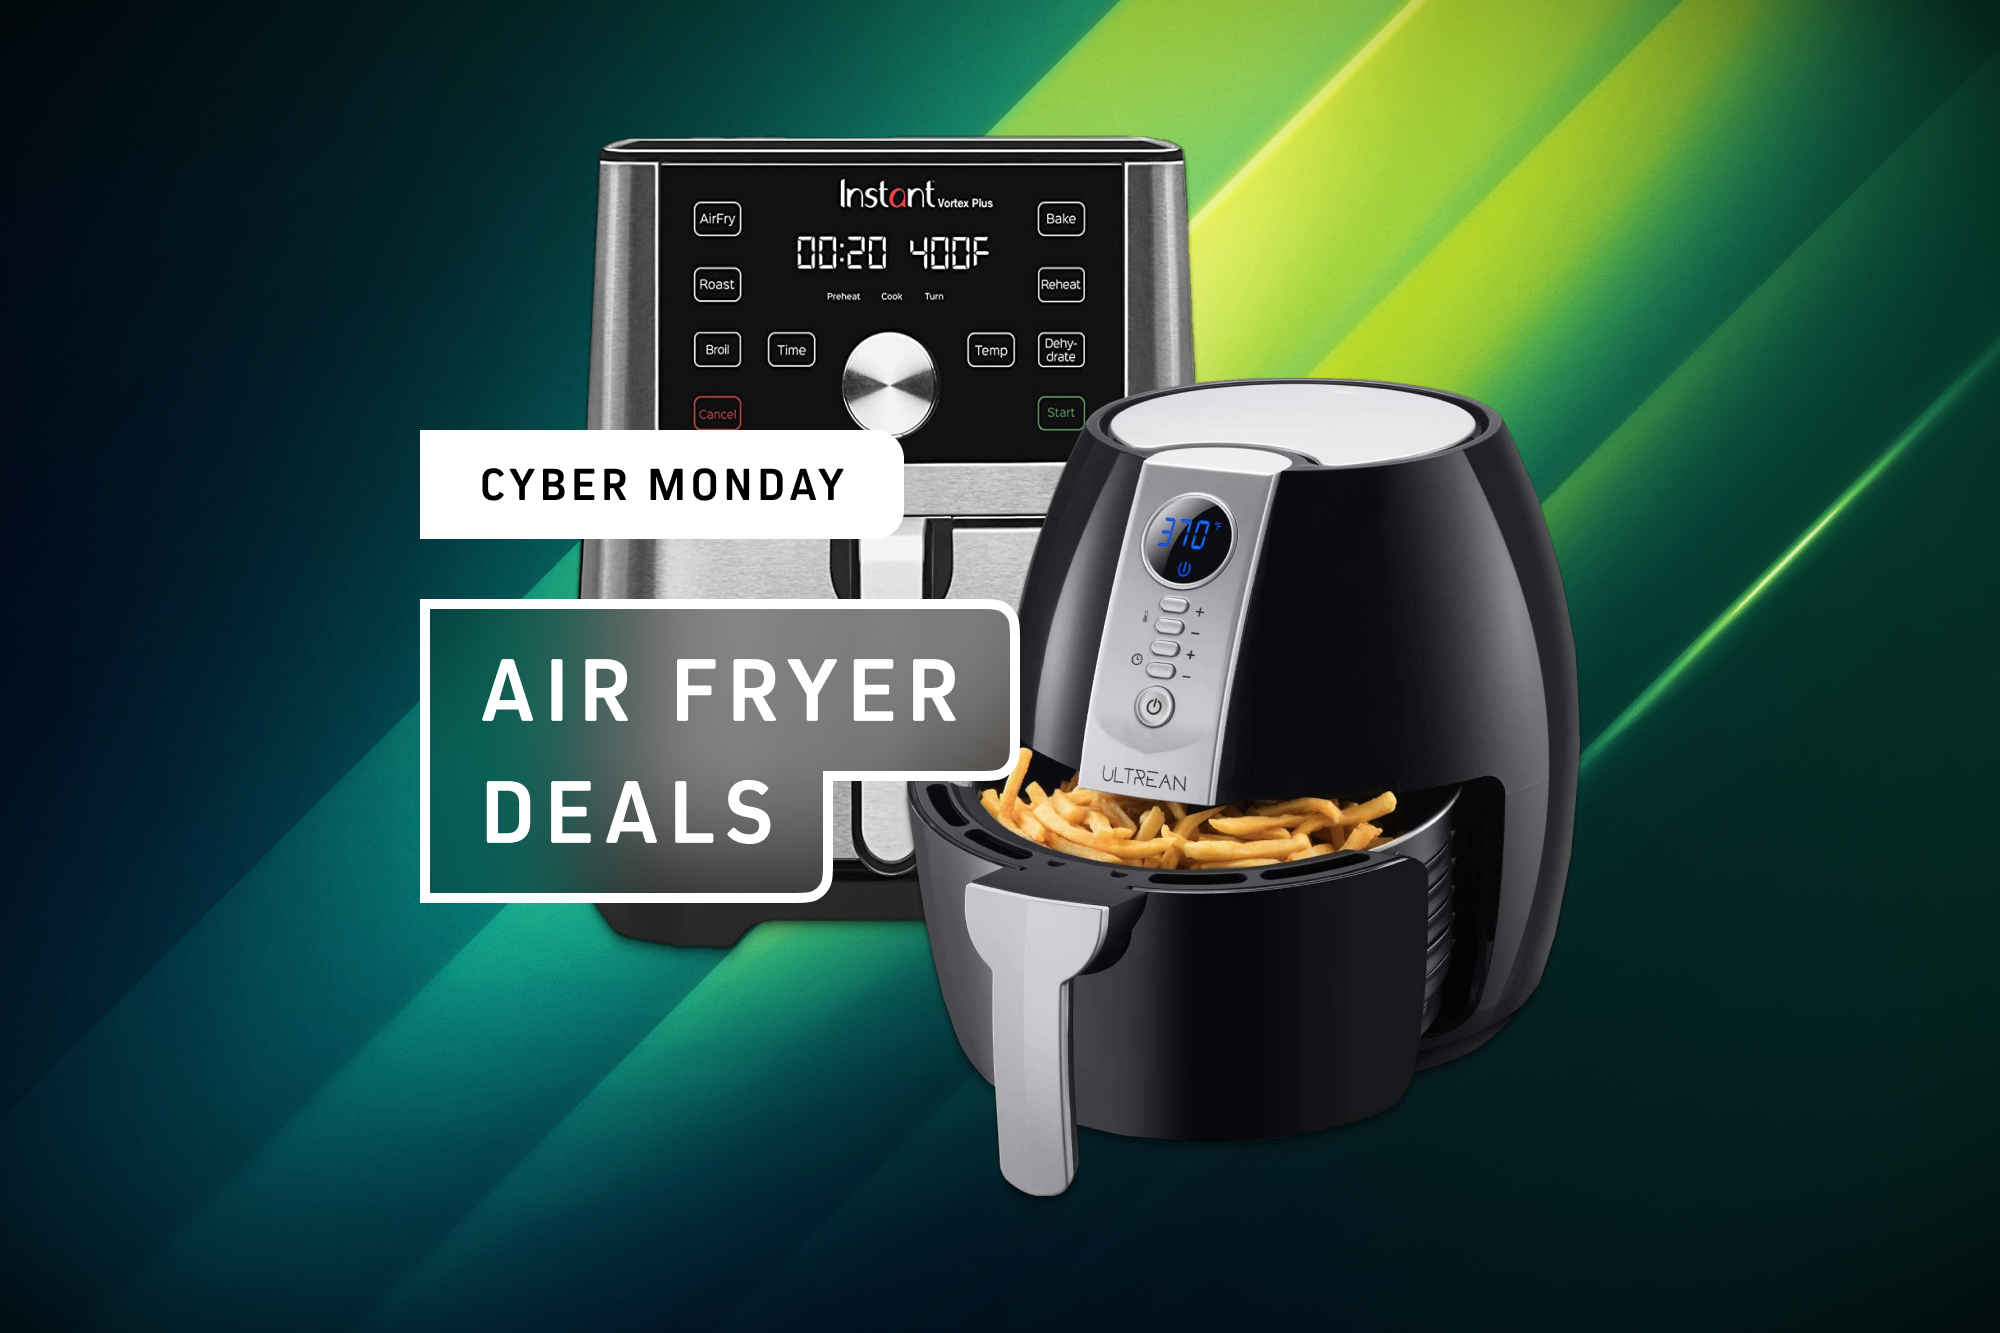 Cyber Monday Black Friday 2021 Air fryer deals: Ninja Air Fryer